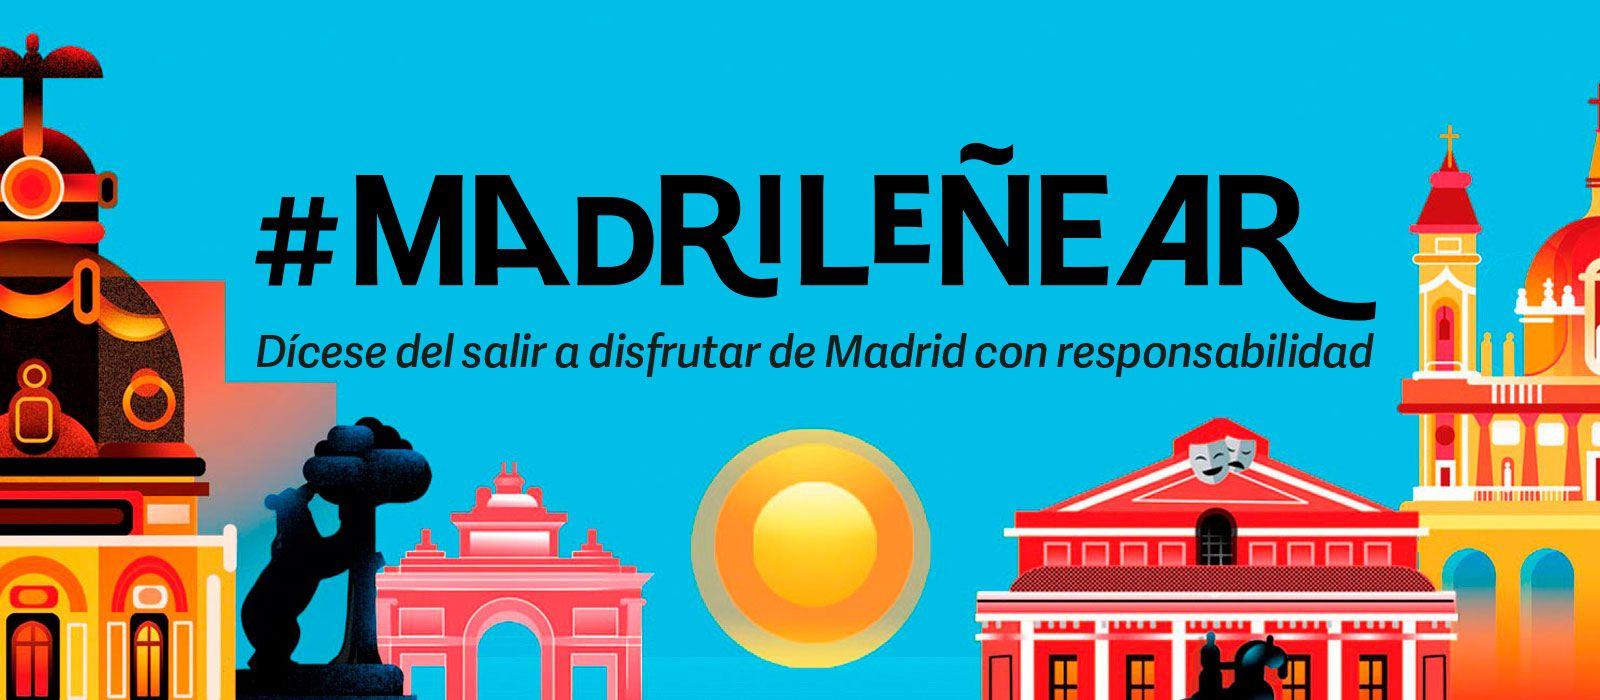 Madrileñear